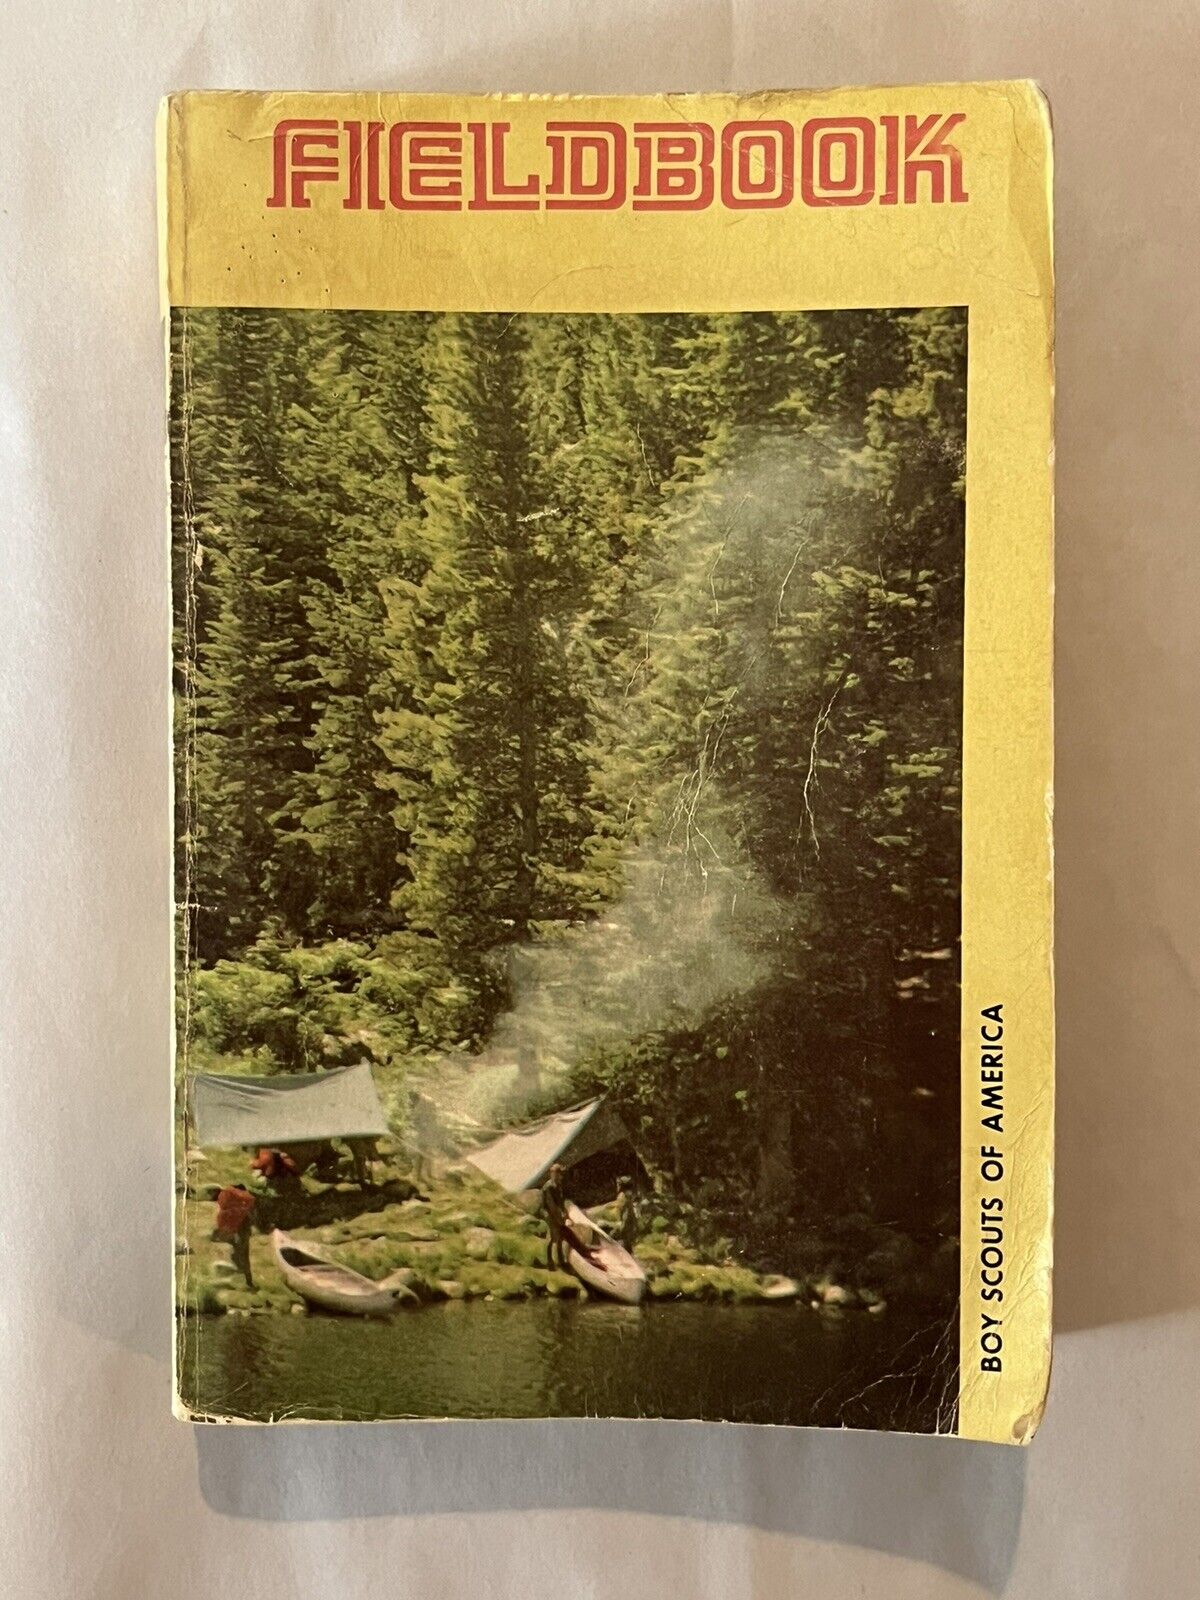 Fieldbook BSA Boy Scouts of America Book 2nd Ed 1980 Printing ISBN 0839532016